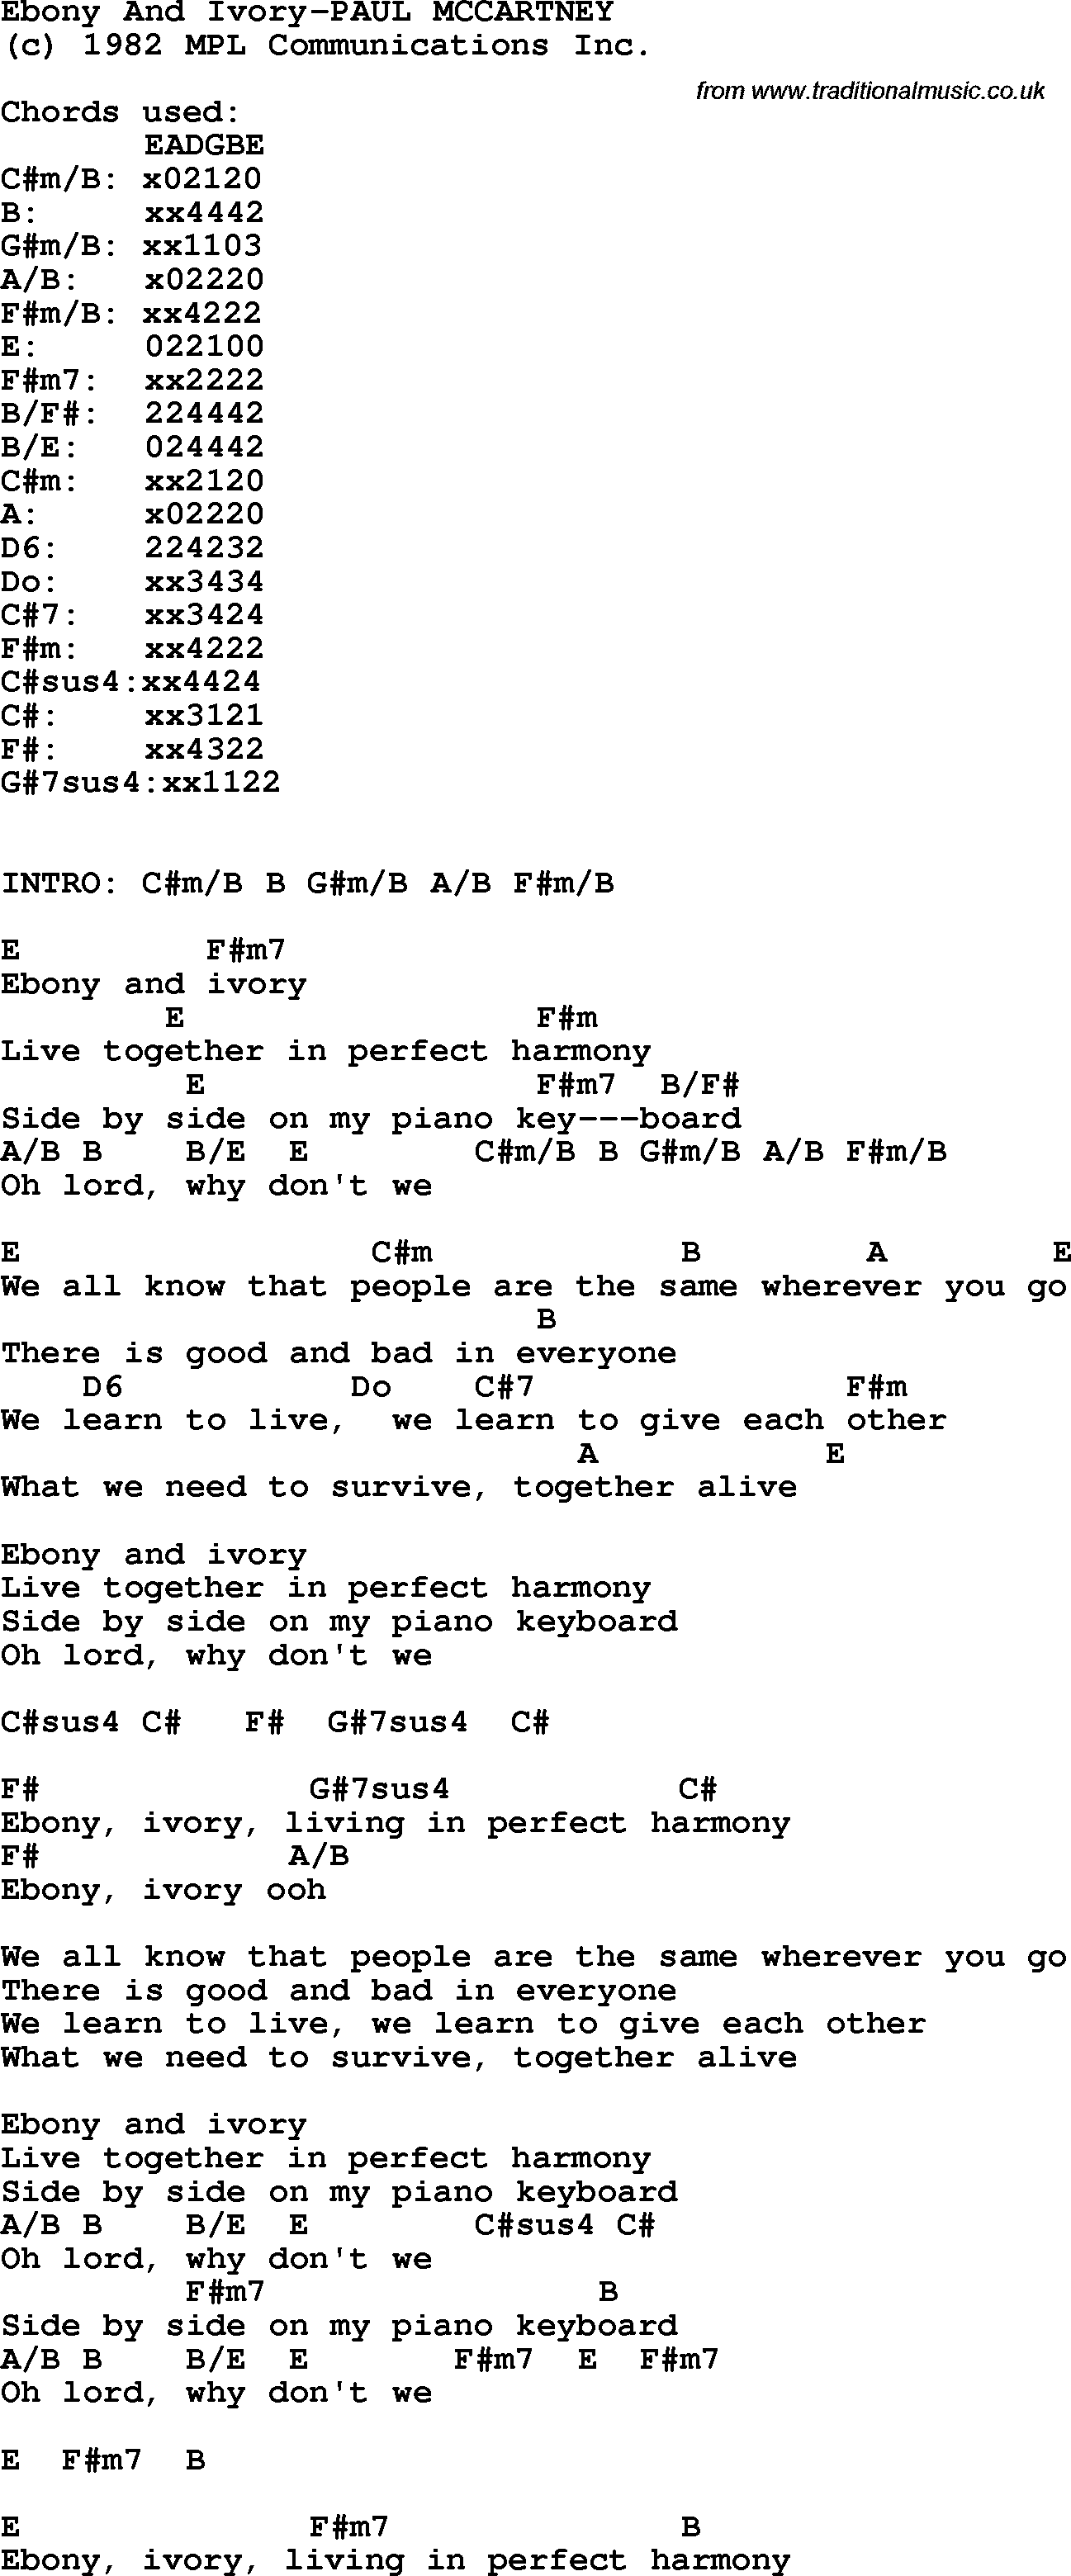 Protest Song Ebony And Ivory-Paul McCartney lyrics and chords